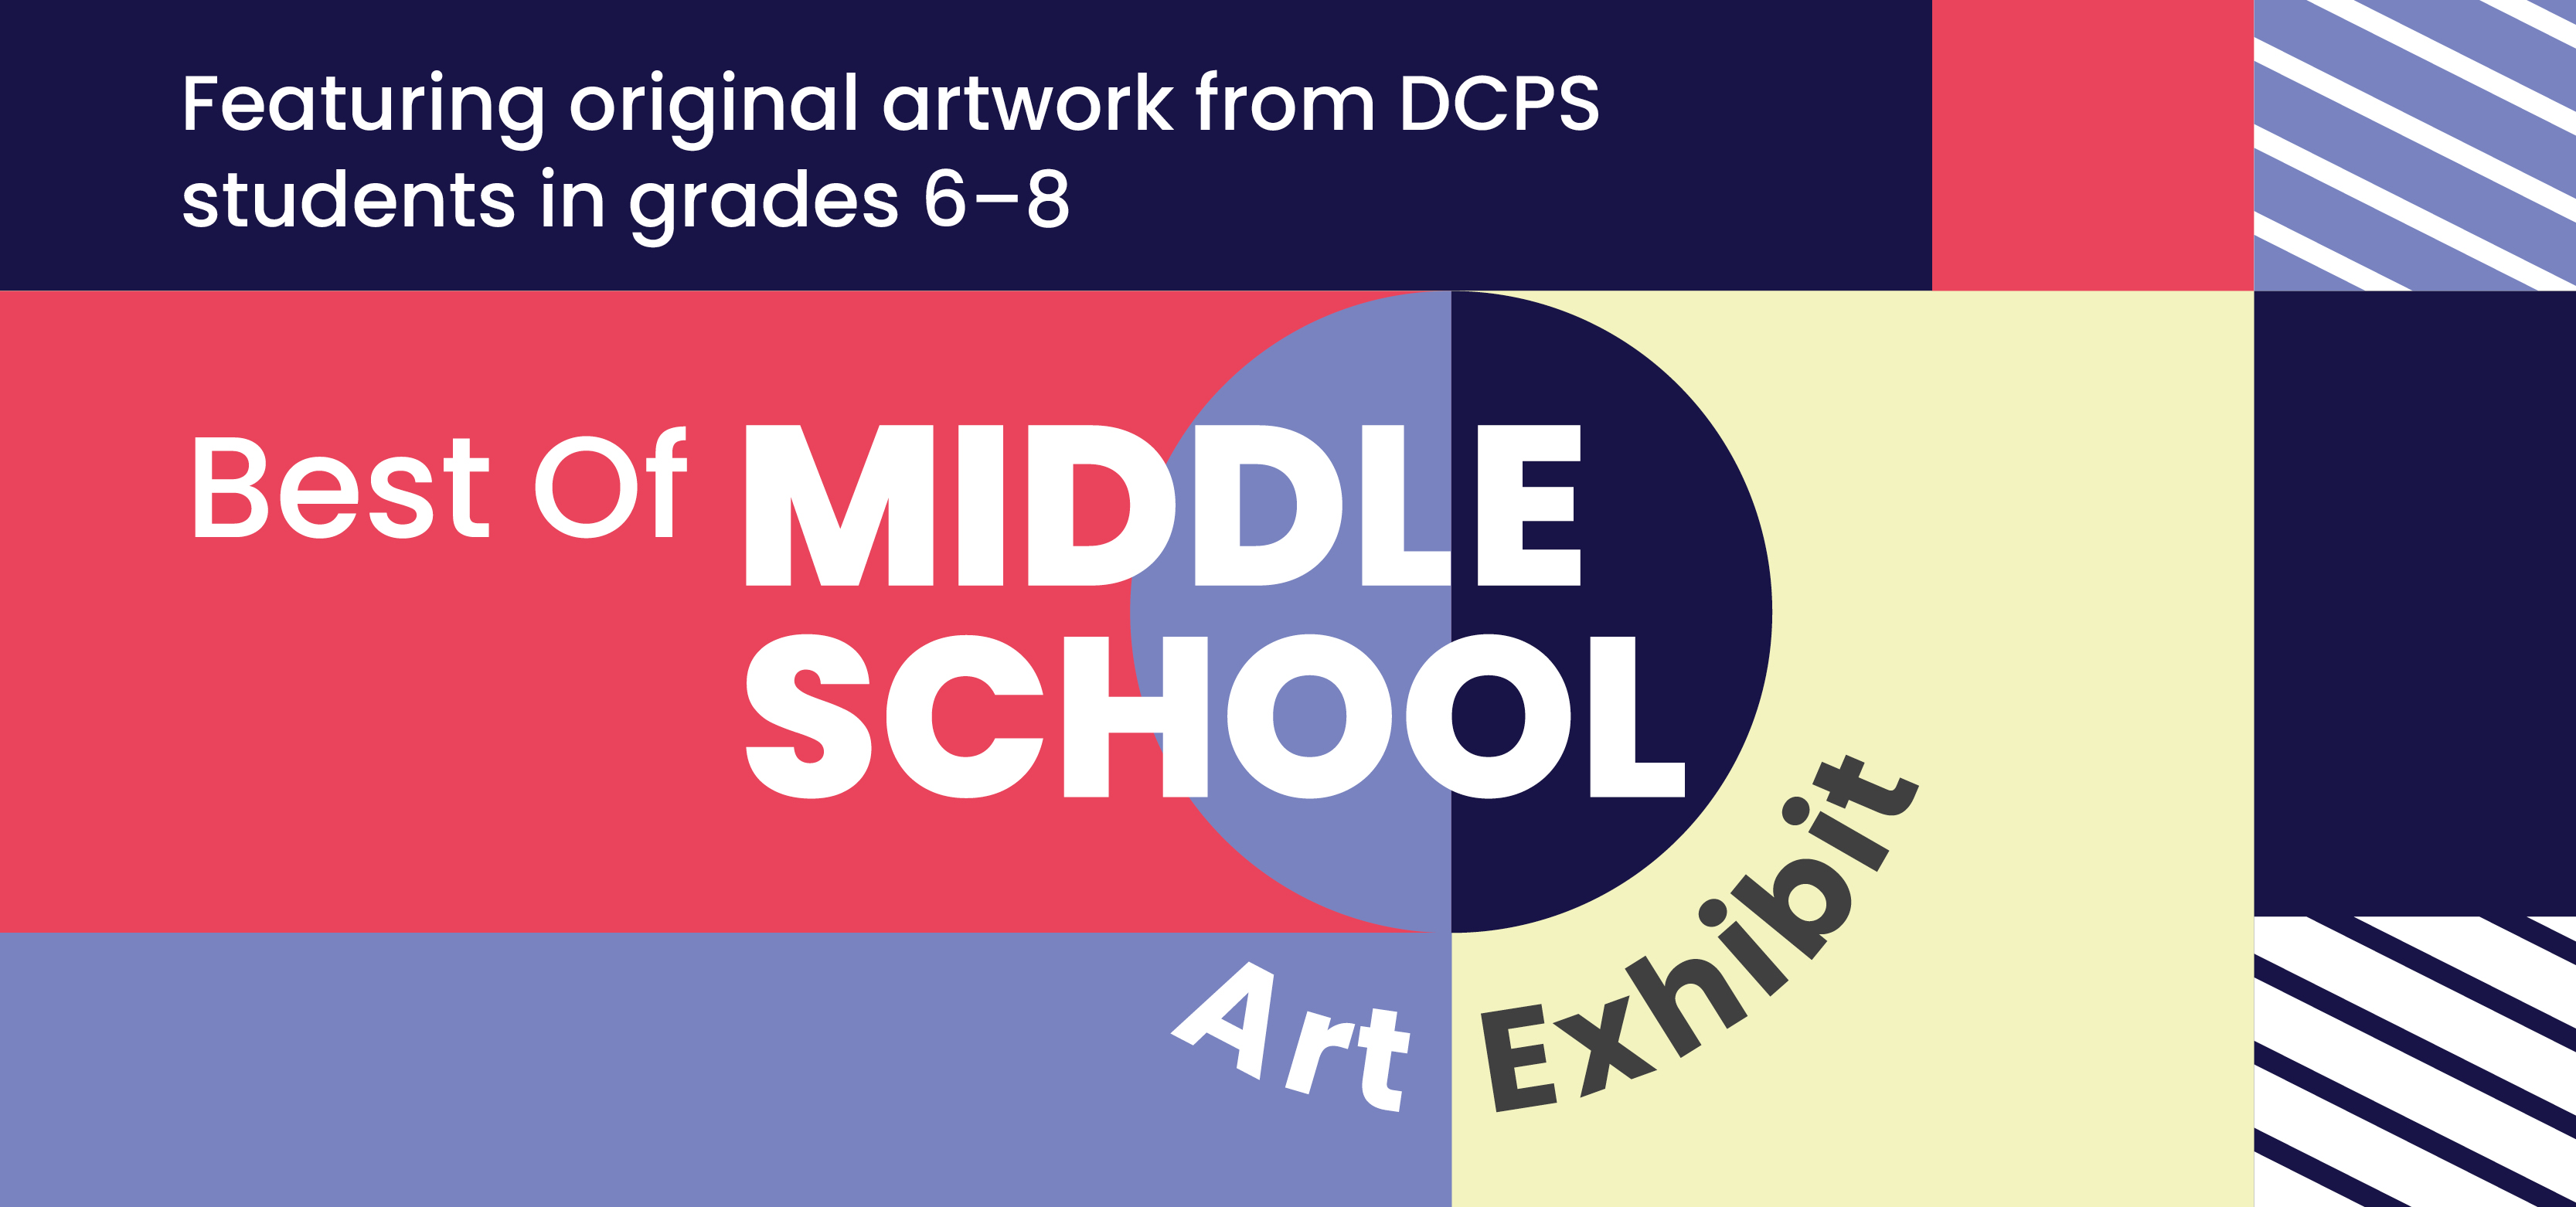 Best of Middle School Art Exhibit. Featuring original artwork from DCPS students in grades 6-8.